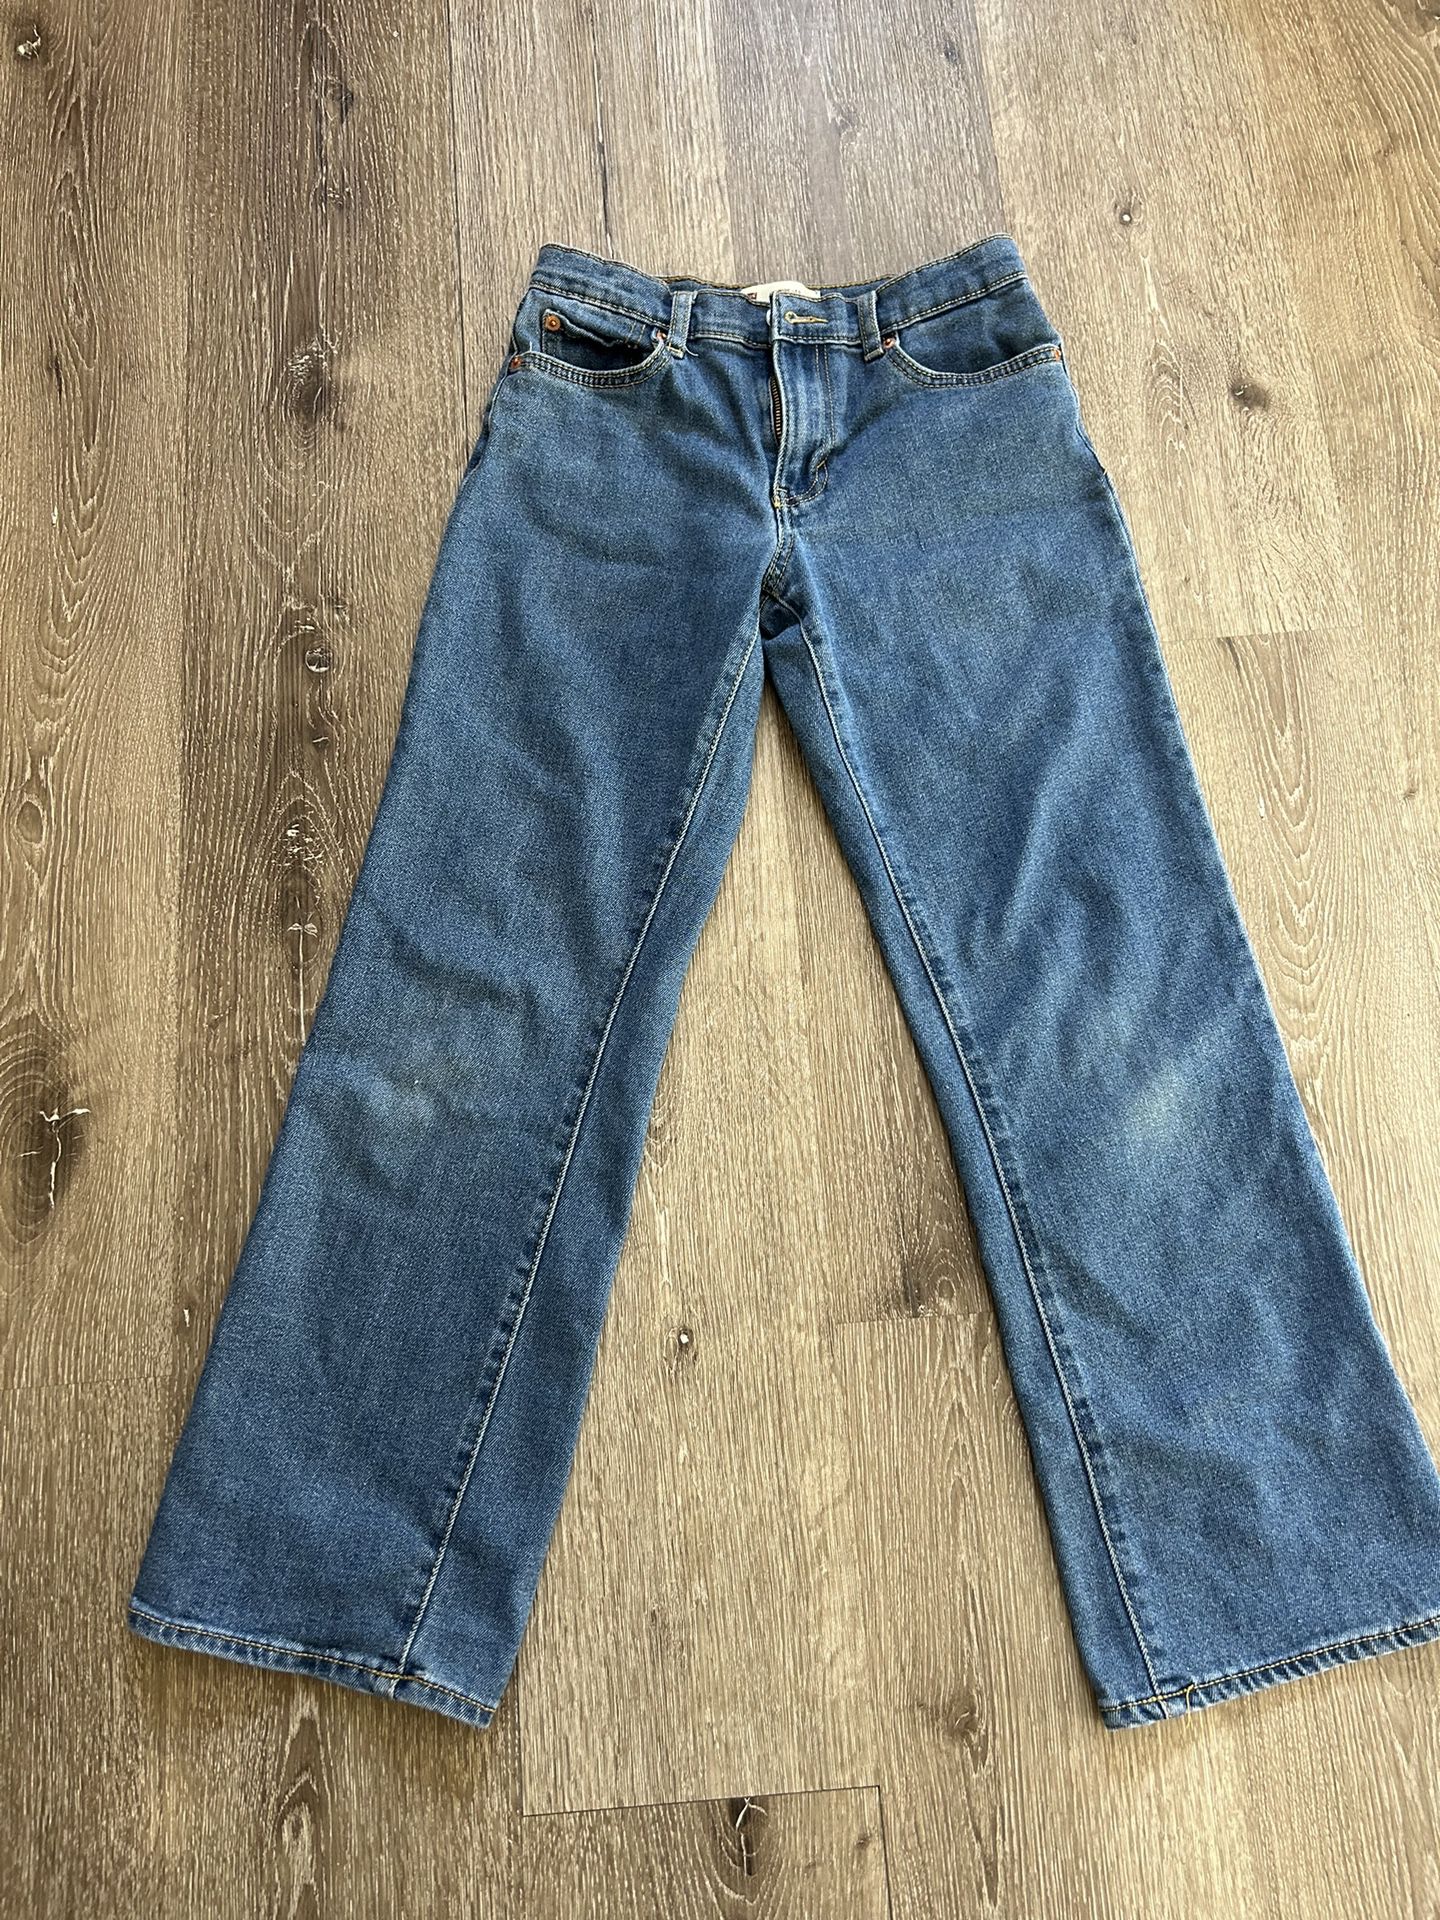 Levi’s Jeans Girls